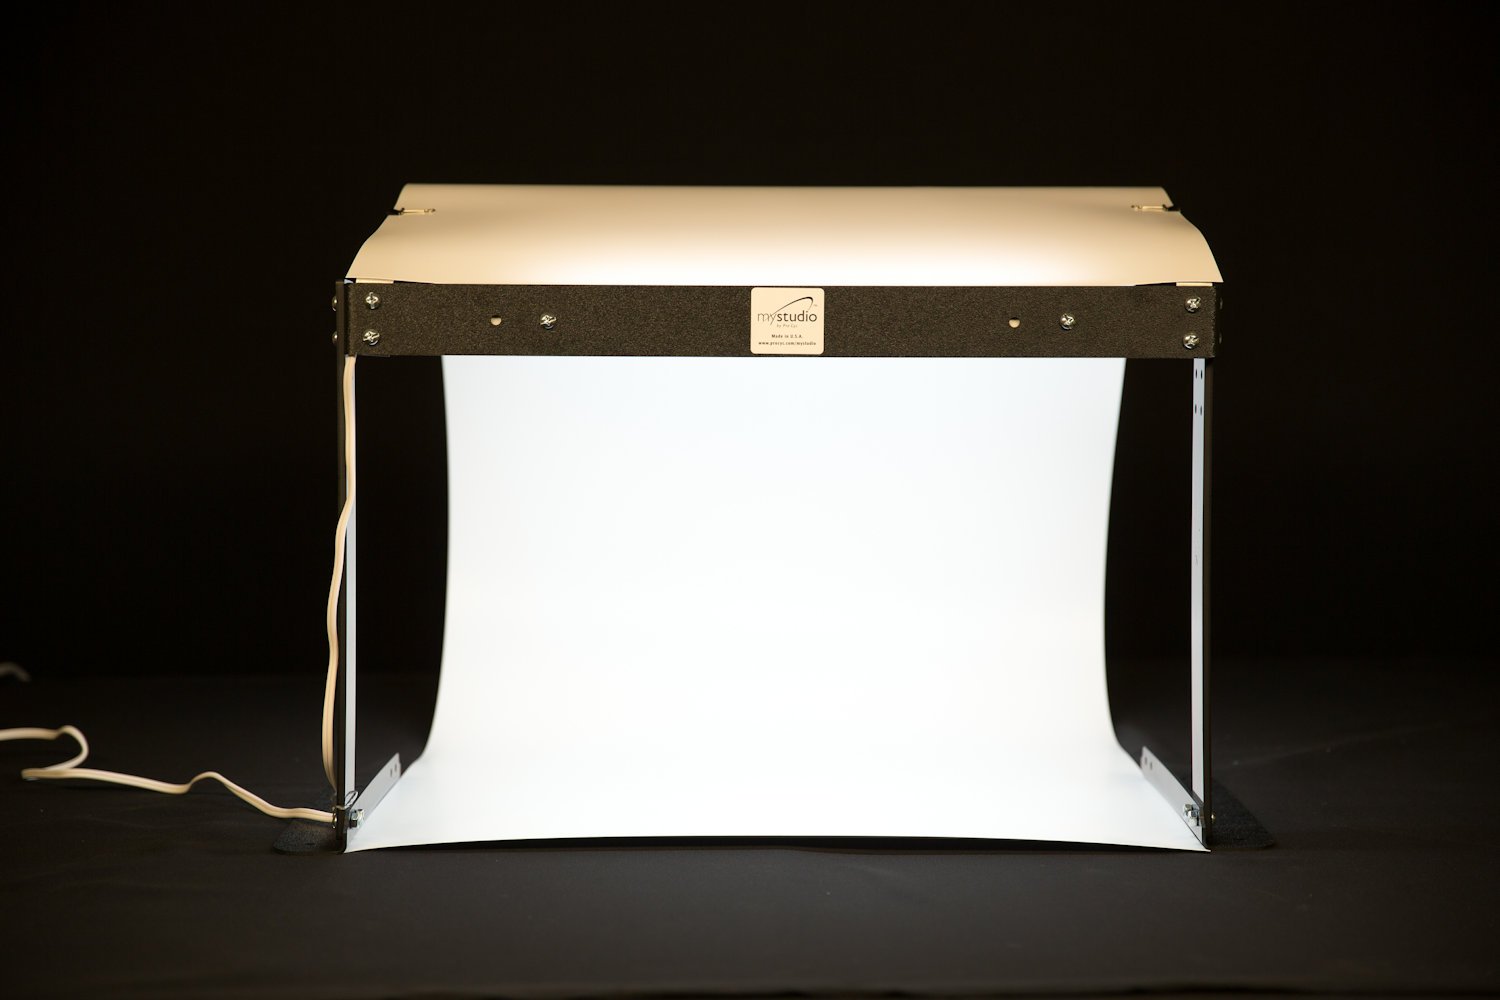 mystudio-ps5-table-top-lightbox-photo-studio-kit